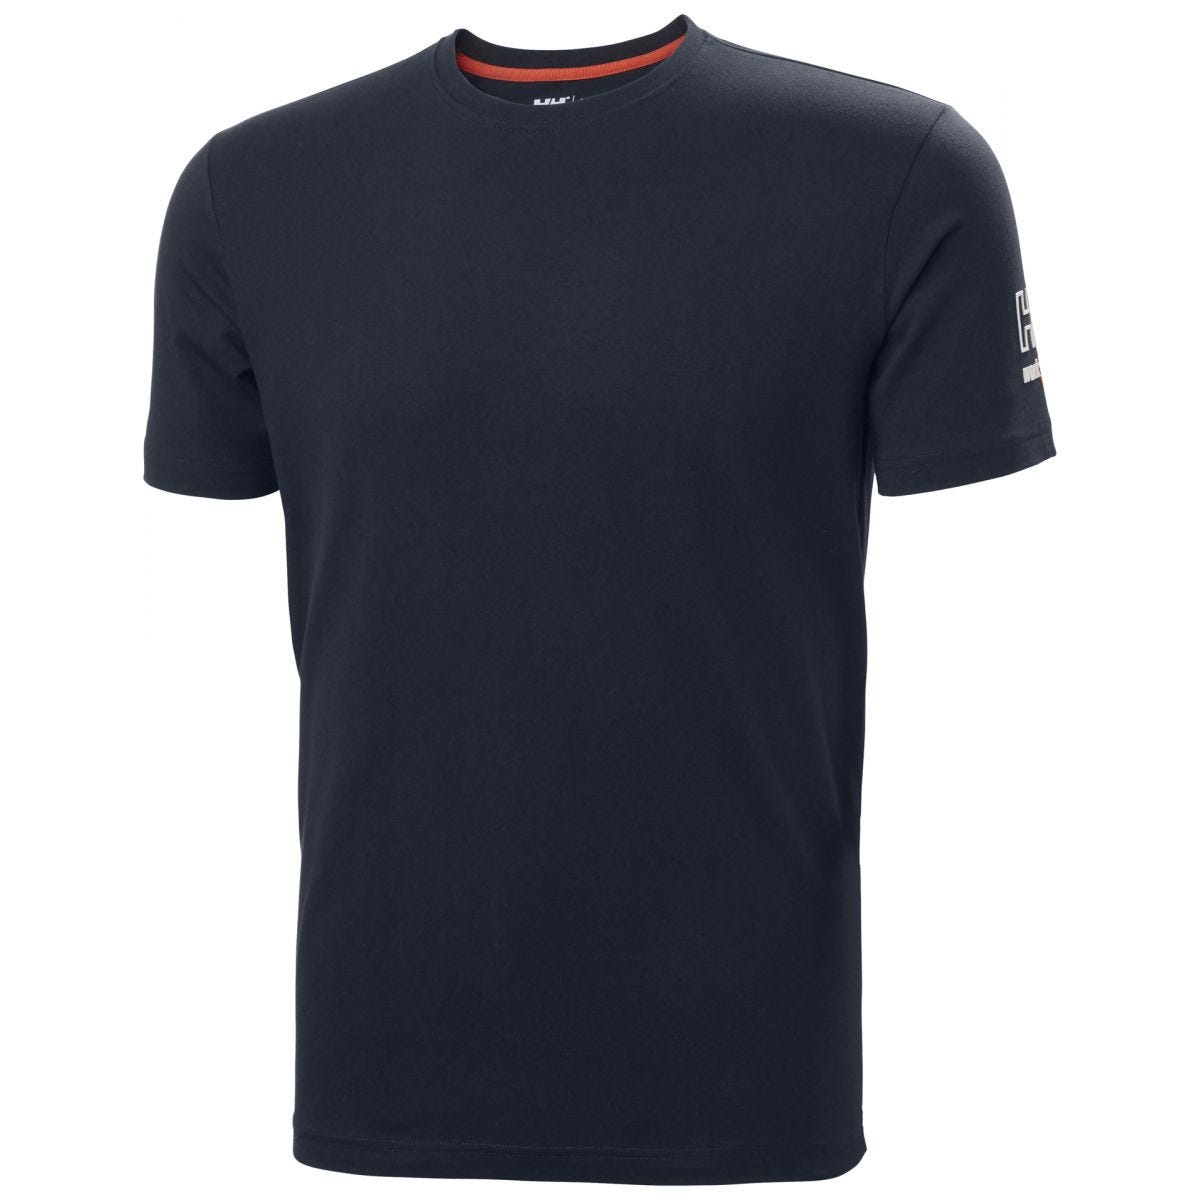 Tee-shirt Kensington Marine - Helly Hansen - Taille XL 0